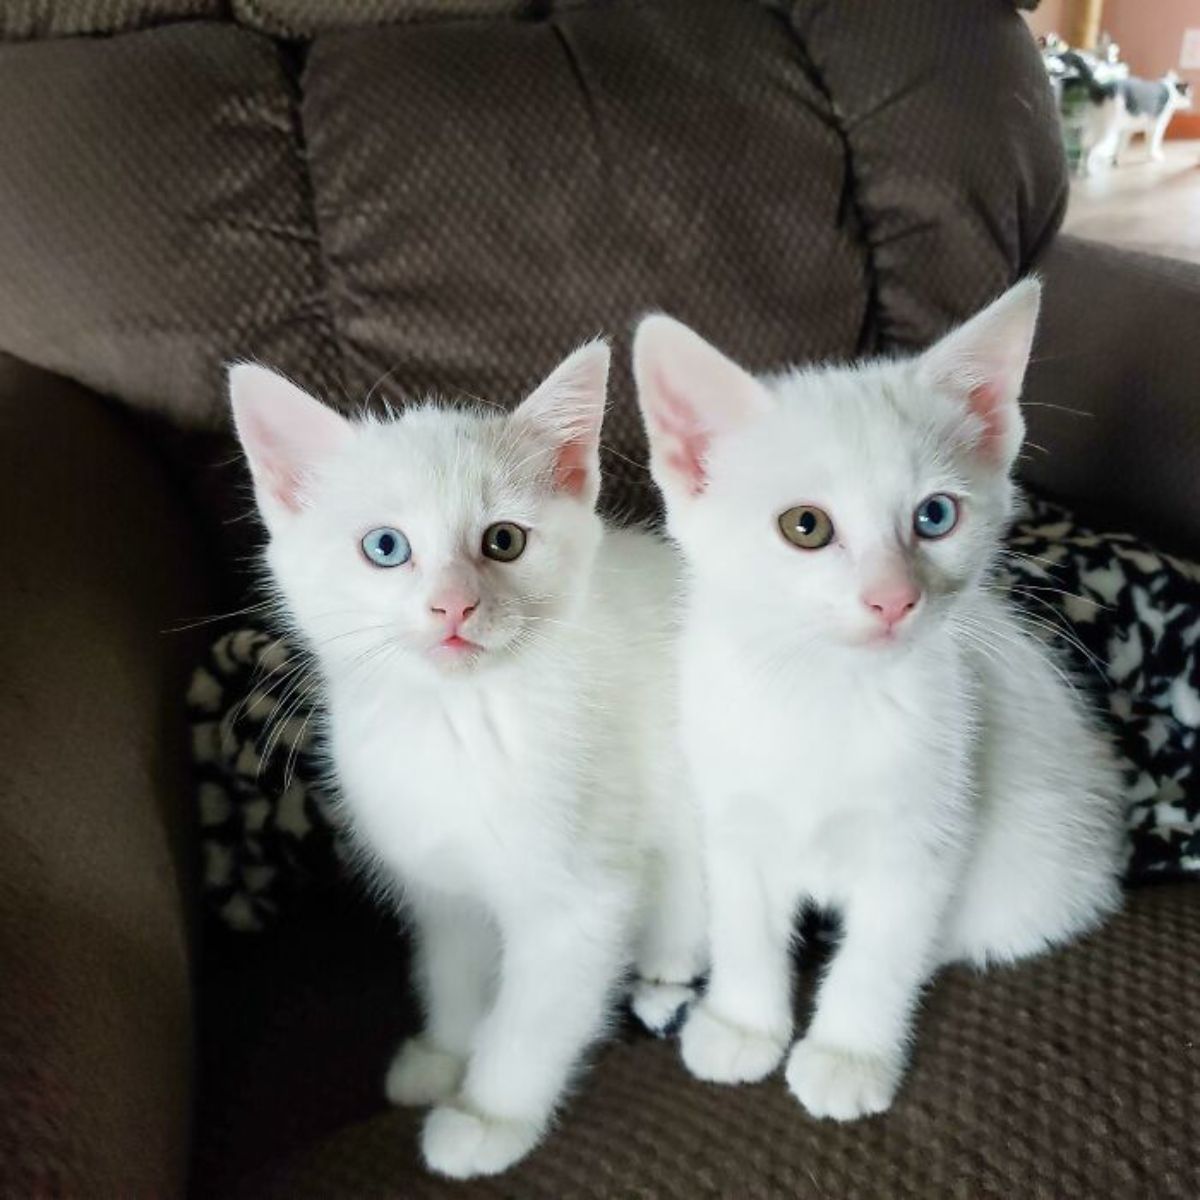 2 white kittens with each kitten having one blue and one green eye